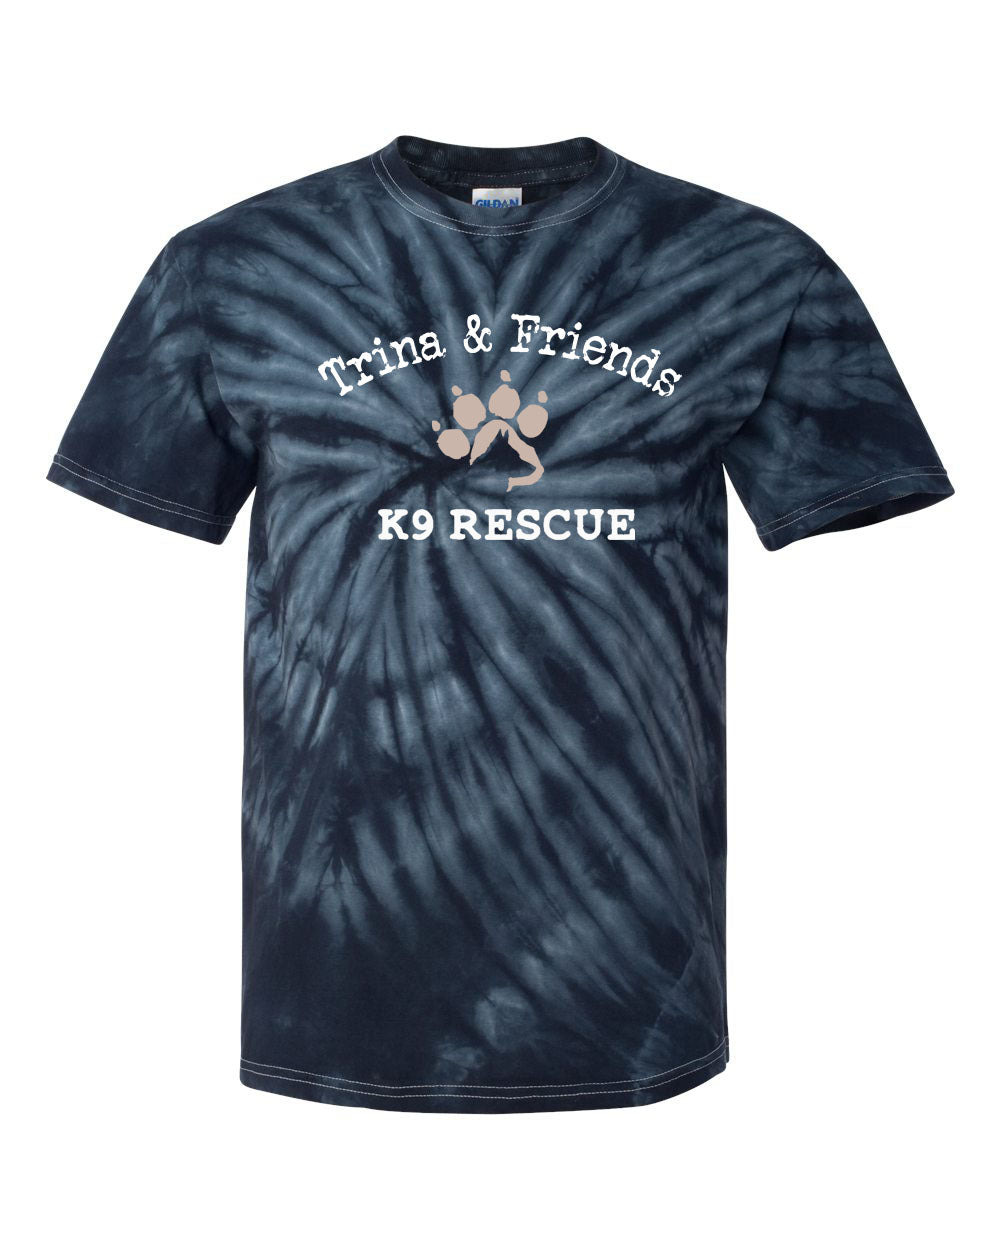 Trina & Friends Tie Dye t-shirt Design 6